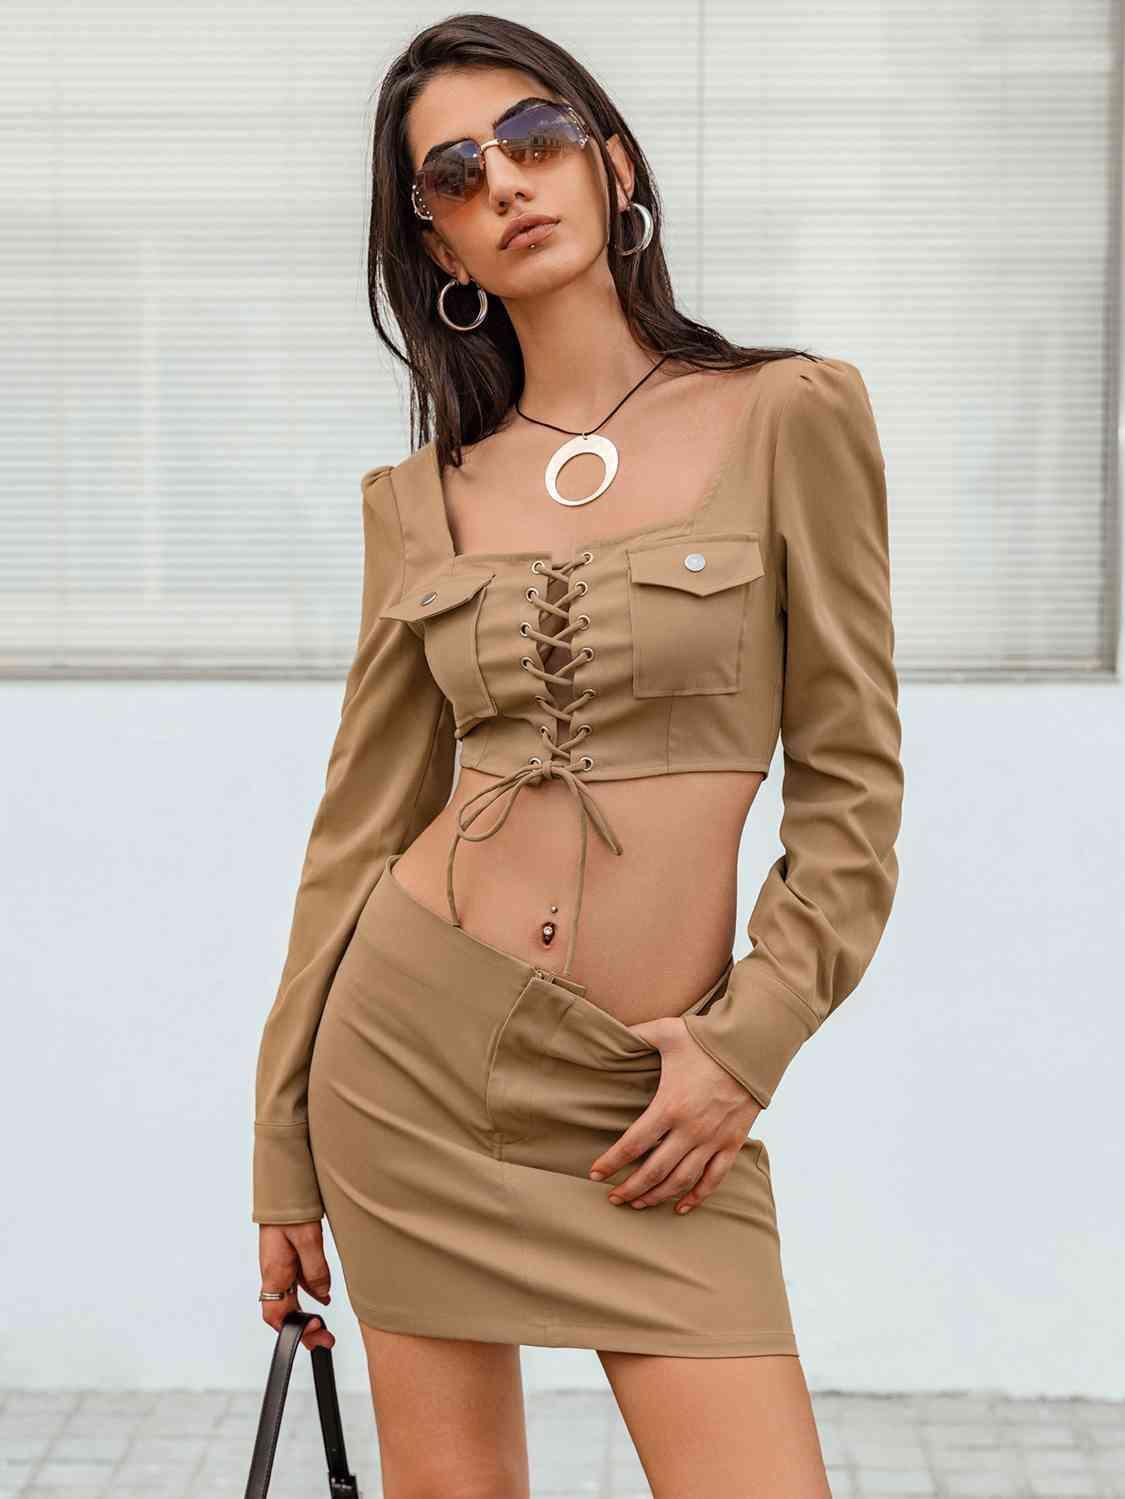 Striking Appeal Long Sleeve Crop Top and Skirt Set - MXSTUDIO.COM